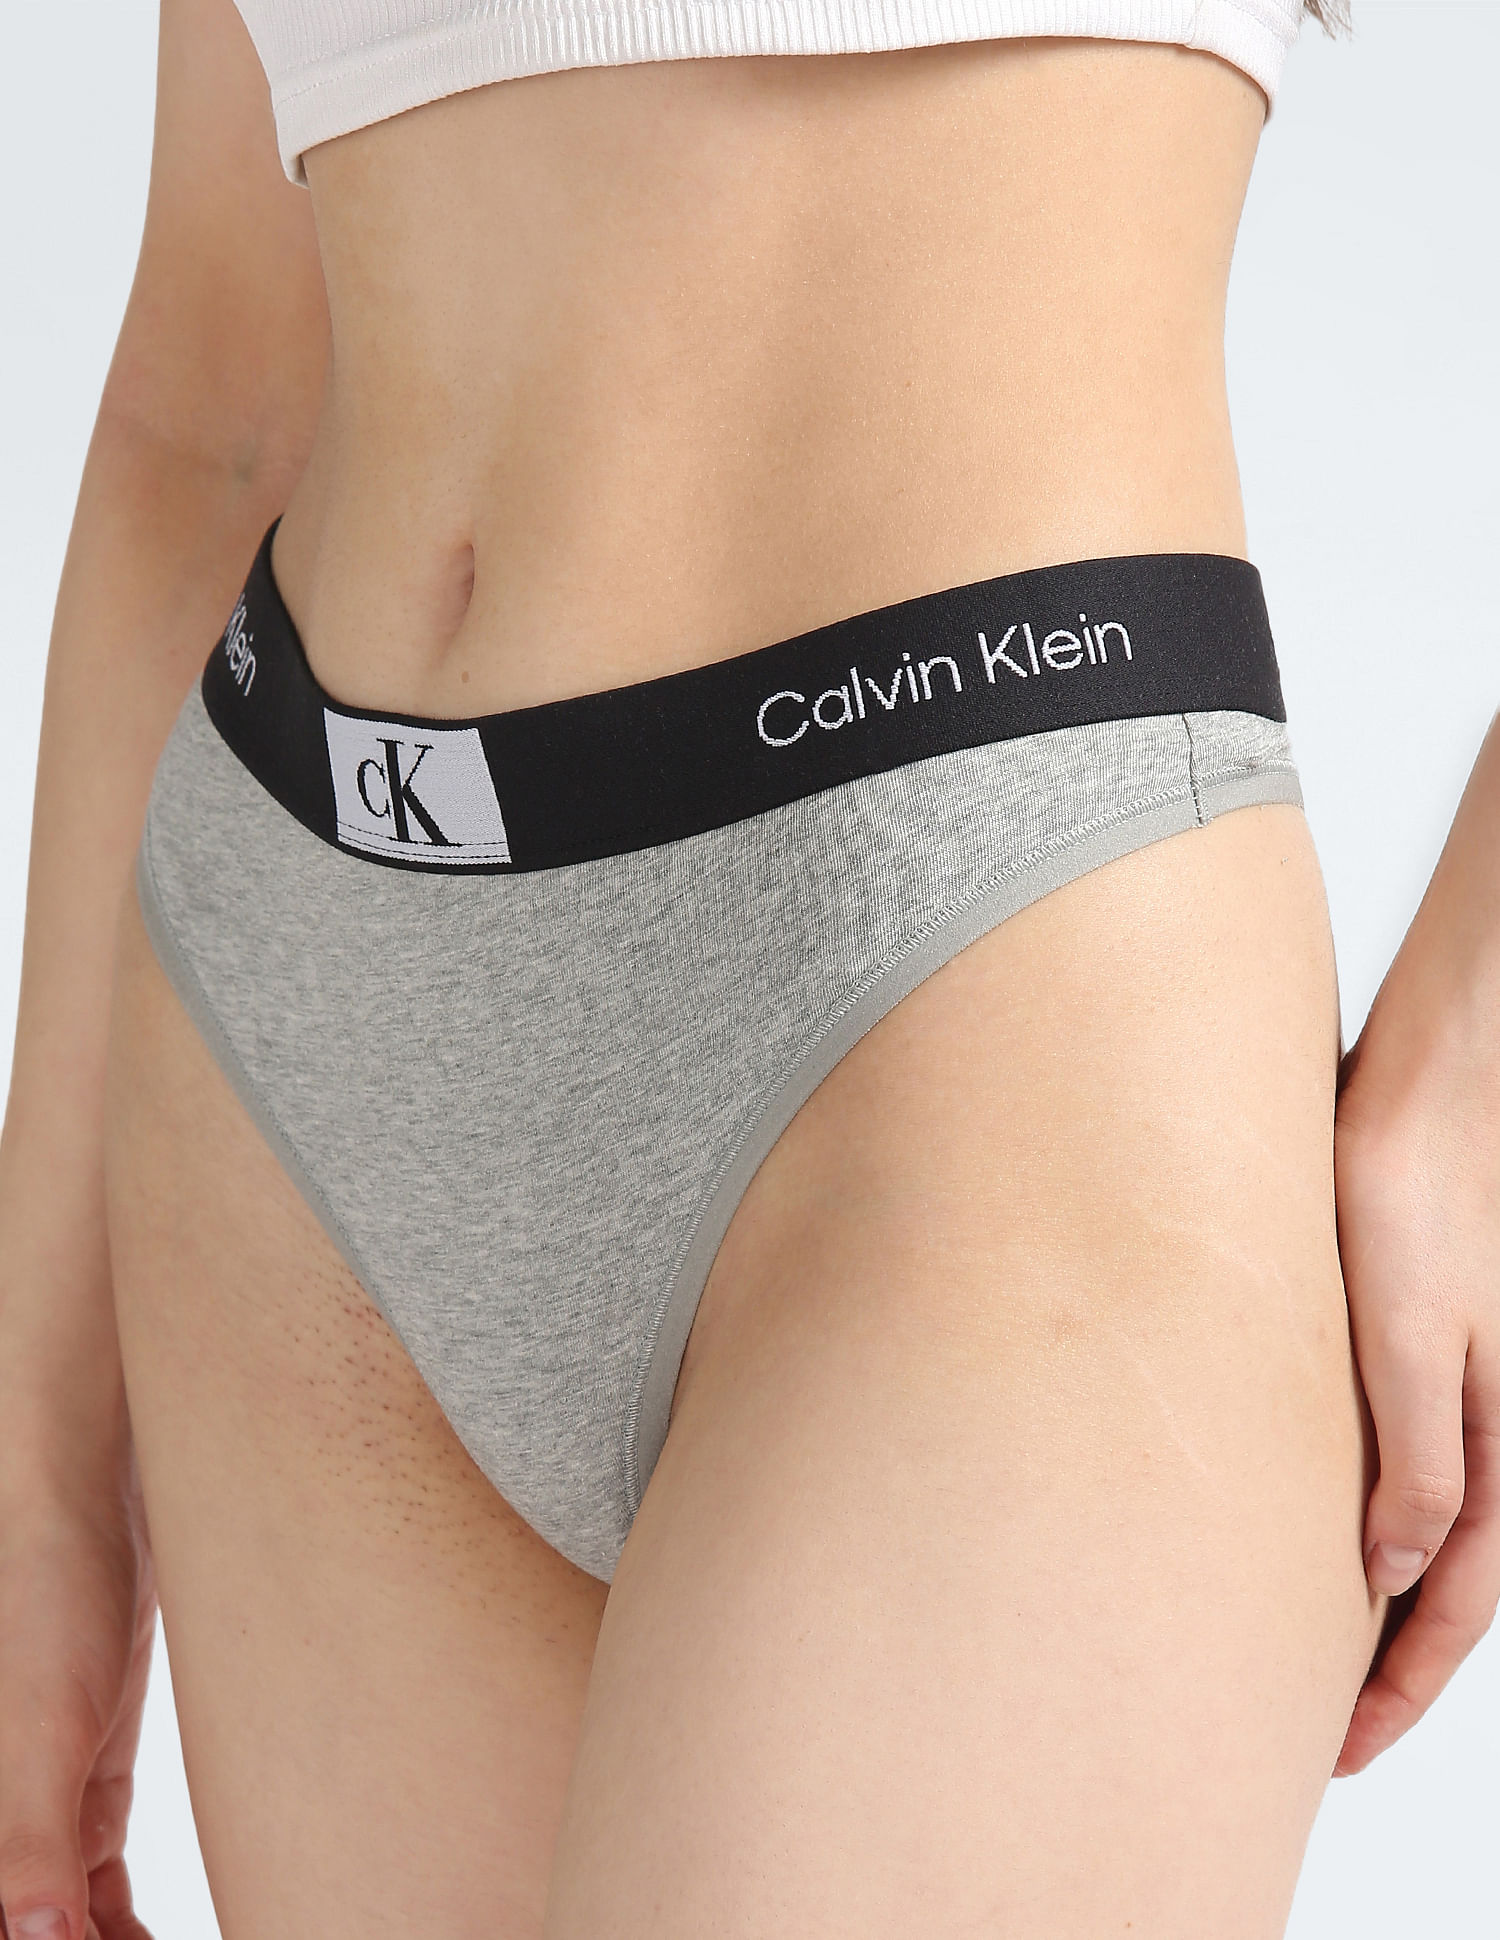 Buy Calvin Klein Underwear Heathered Reprocessed Cotton Thong 